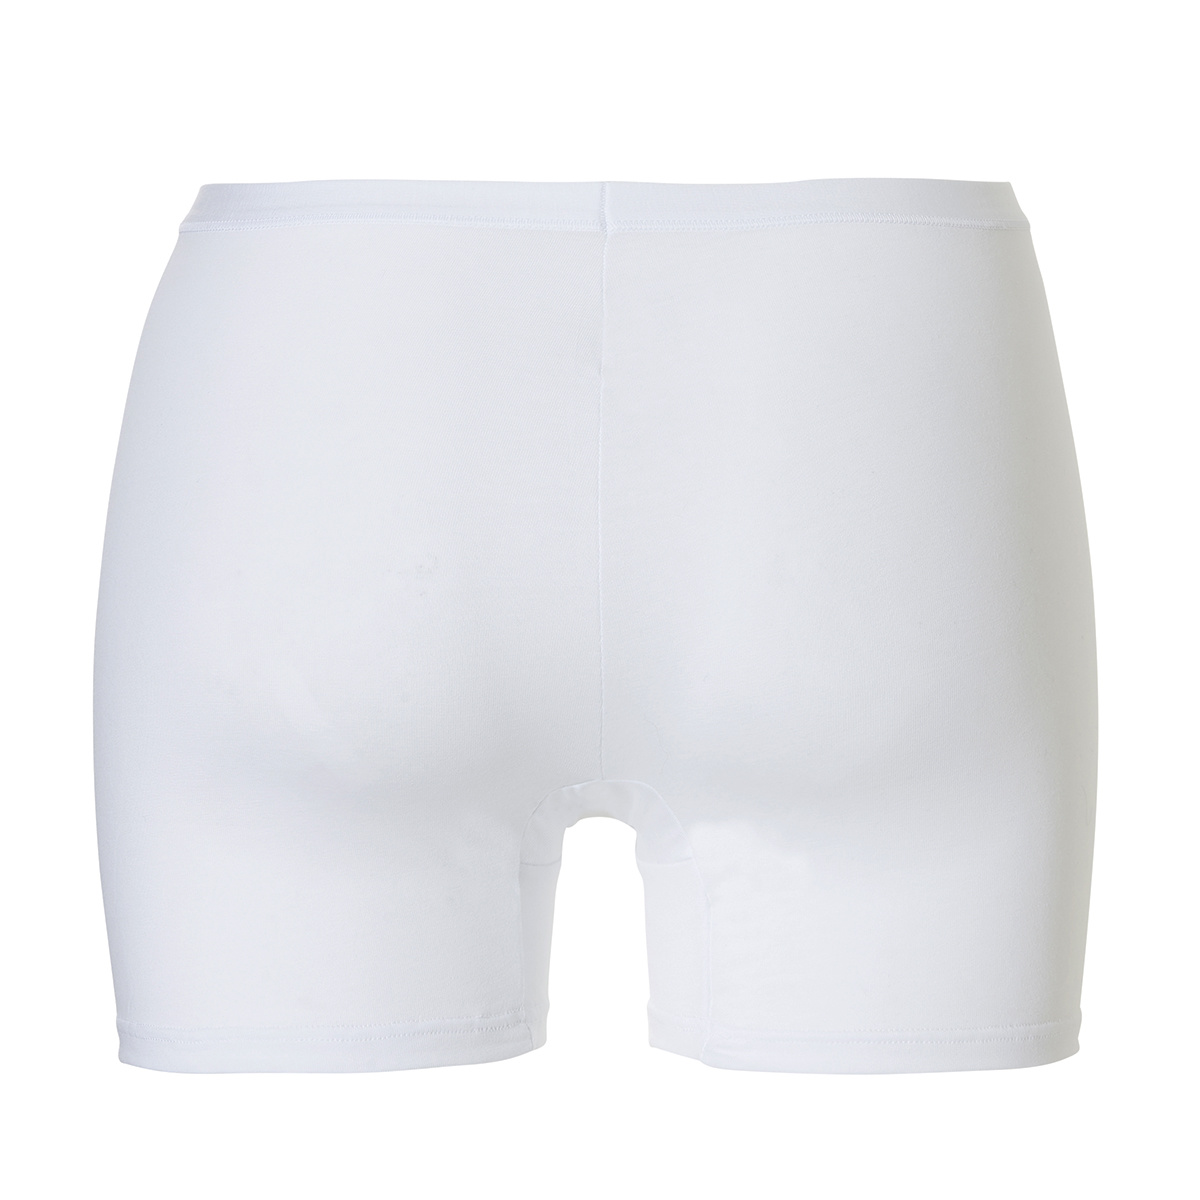 https://cdn.webshopapp.com/shops/316659/files/426956531/cotonella-cotonella-ladies-boxer-shorts-cotton-whi.jpg